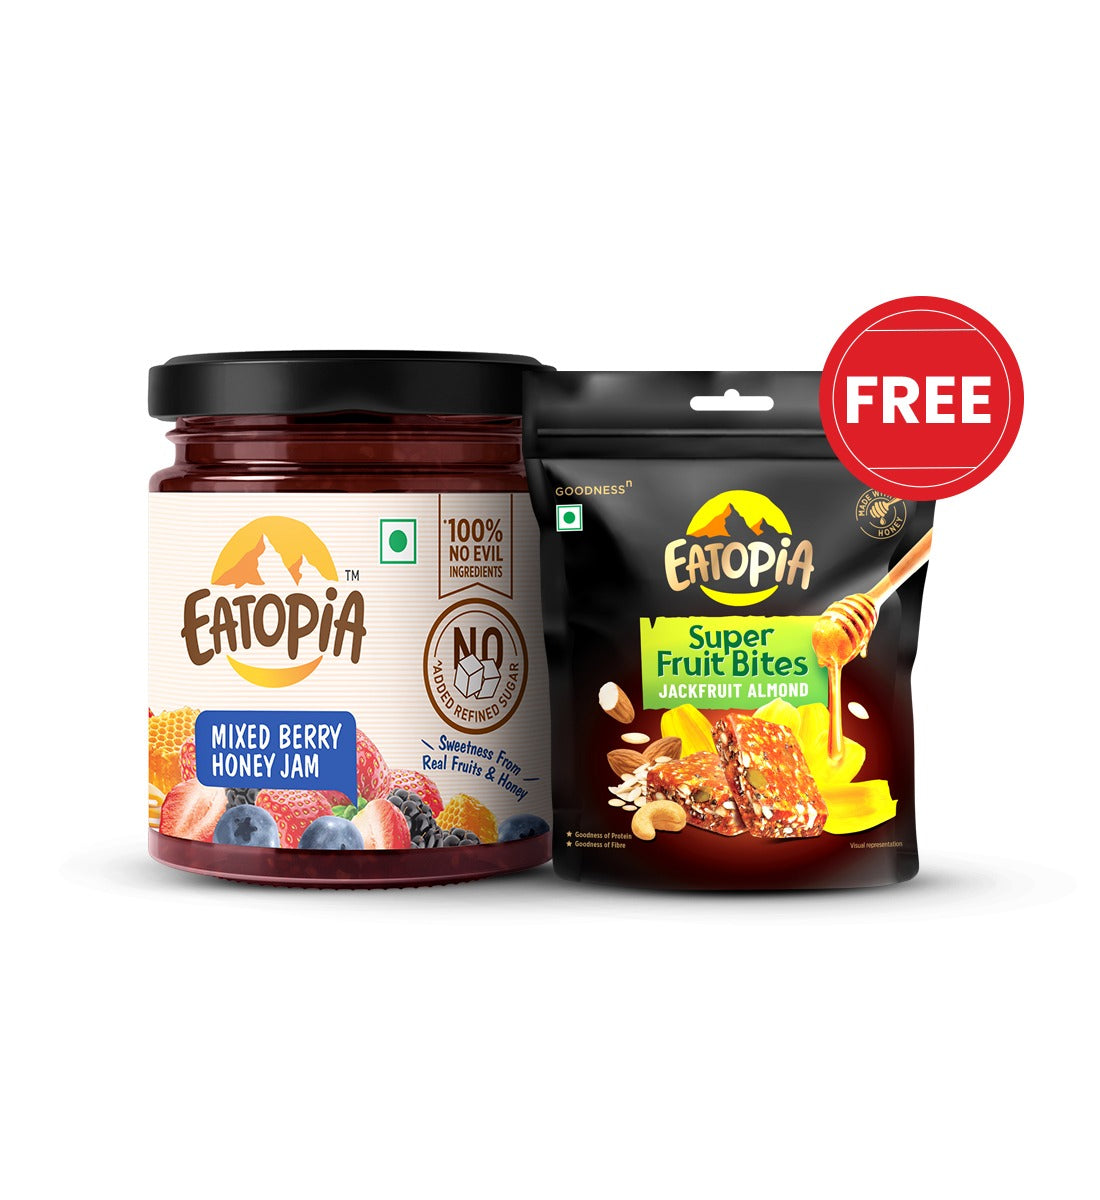 Eatopia Mixedberry honey jam + Jackfruit Almonds-60g (free)